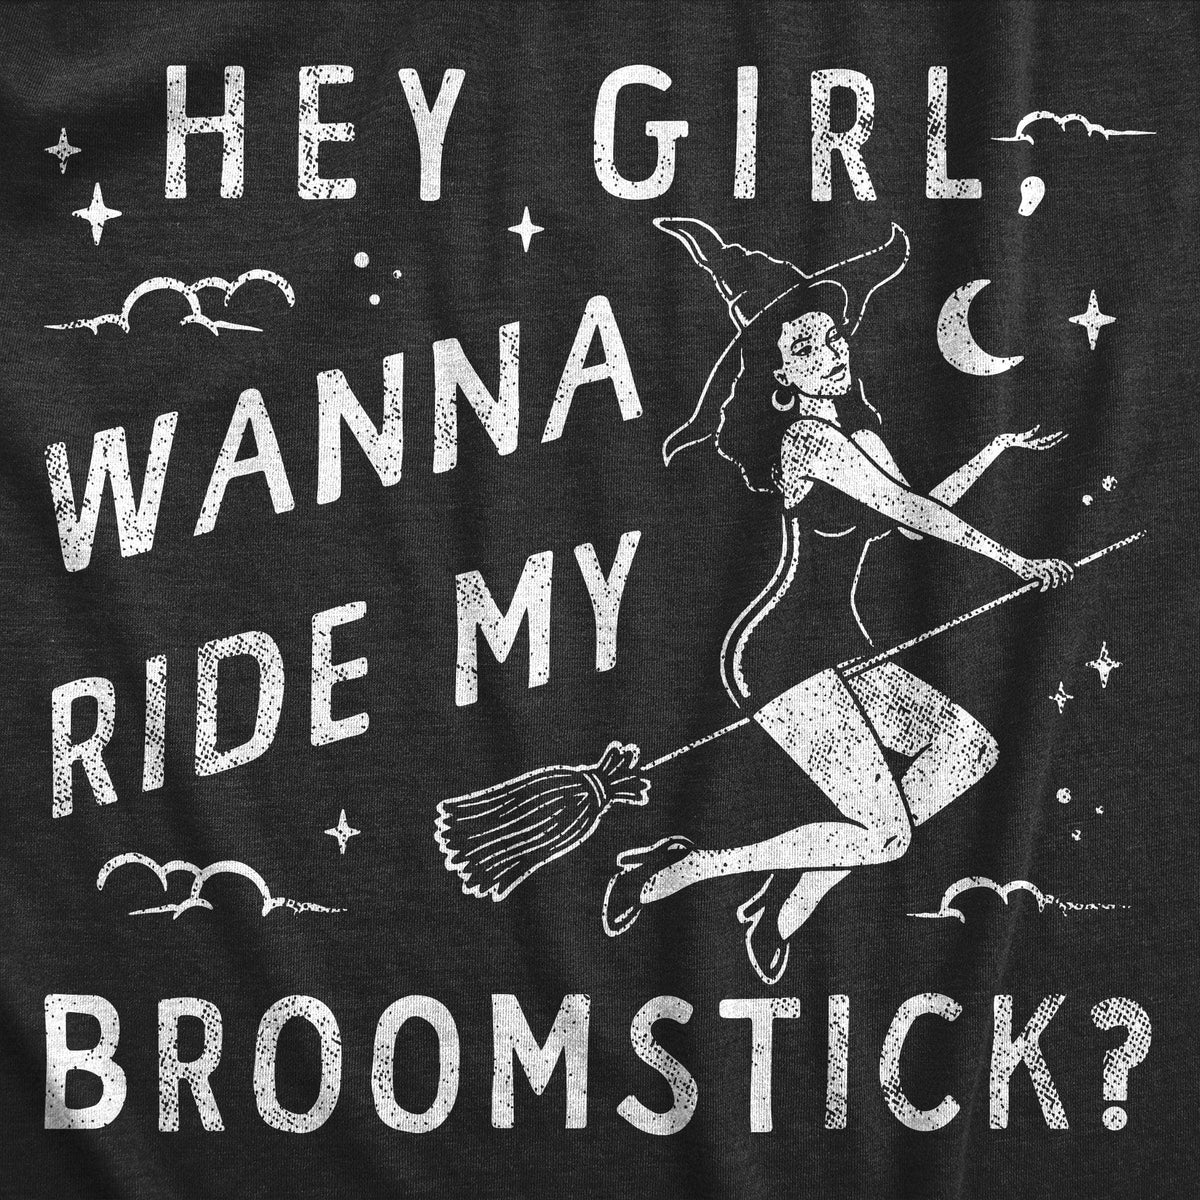 Hey Girl Wanna Ride My Broom Stick Men&#39;s Tshirt  -  Crazy Dog T-Shirts